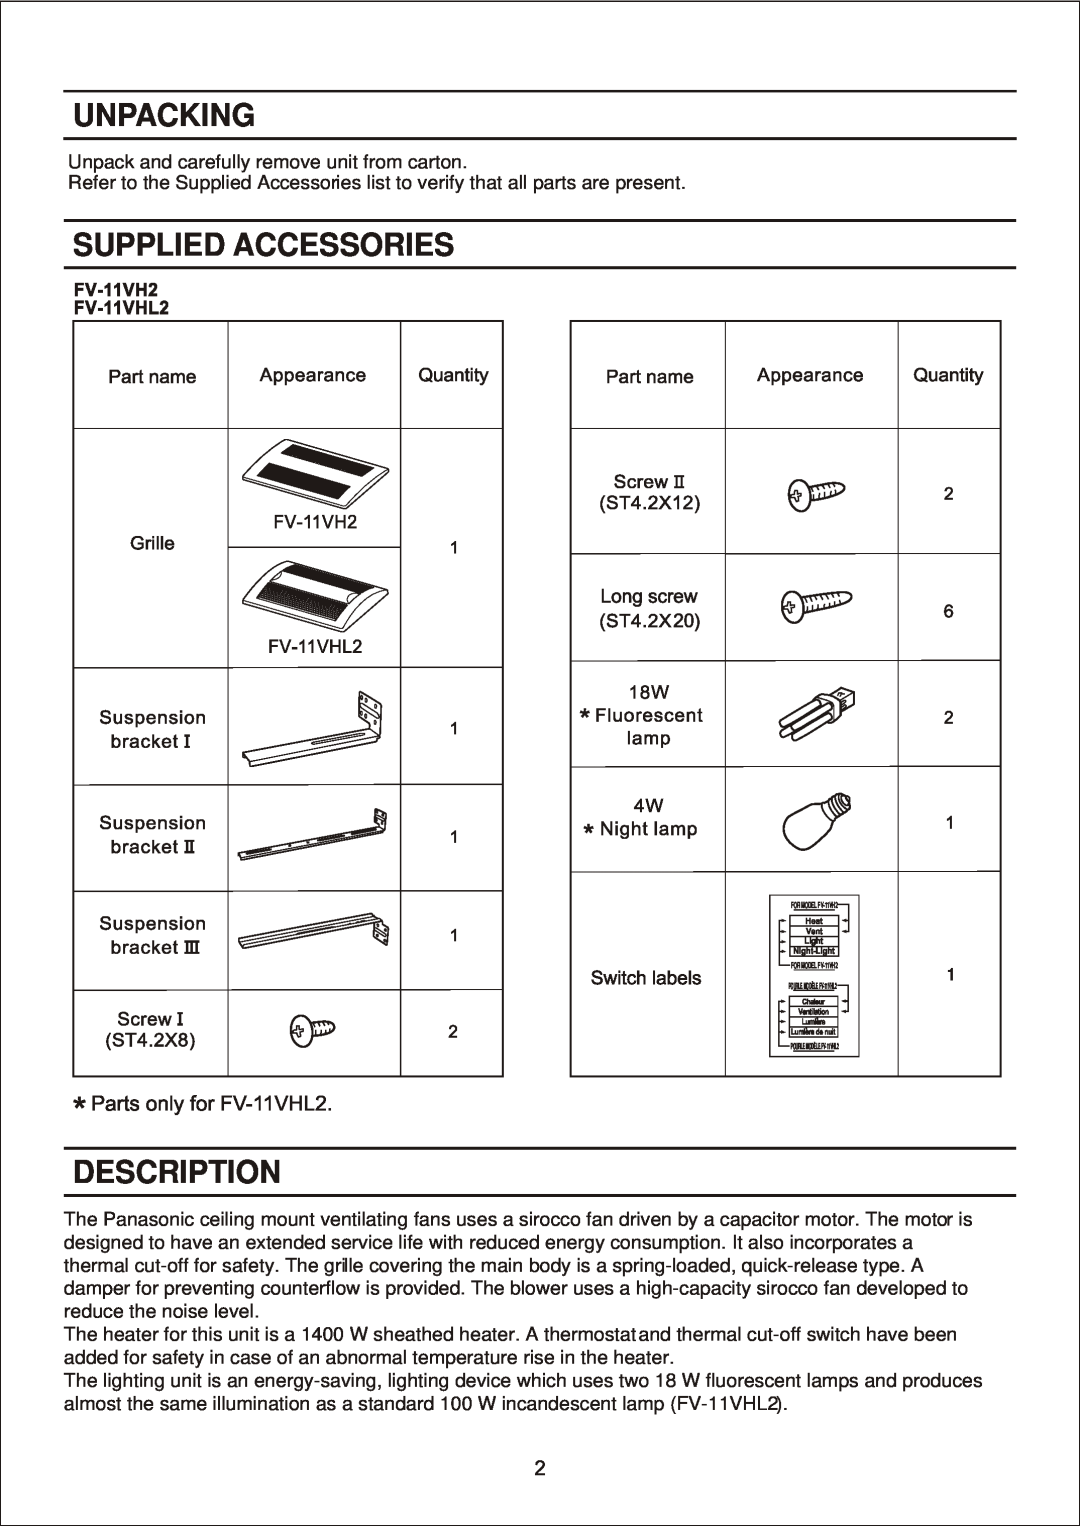 Panasonic FV-11VH2 manual Unpacking, Supplied Accessories, Description 